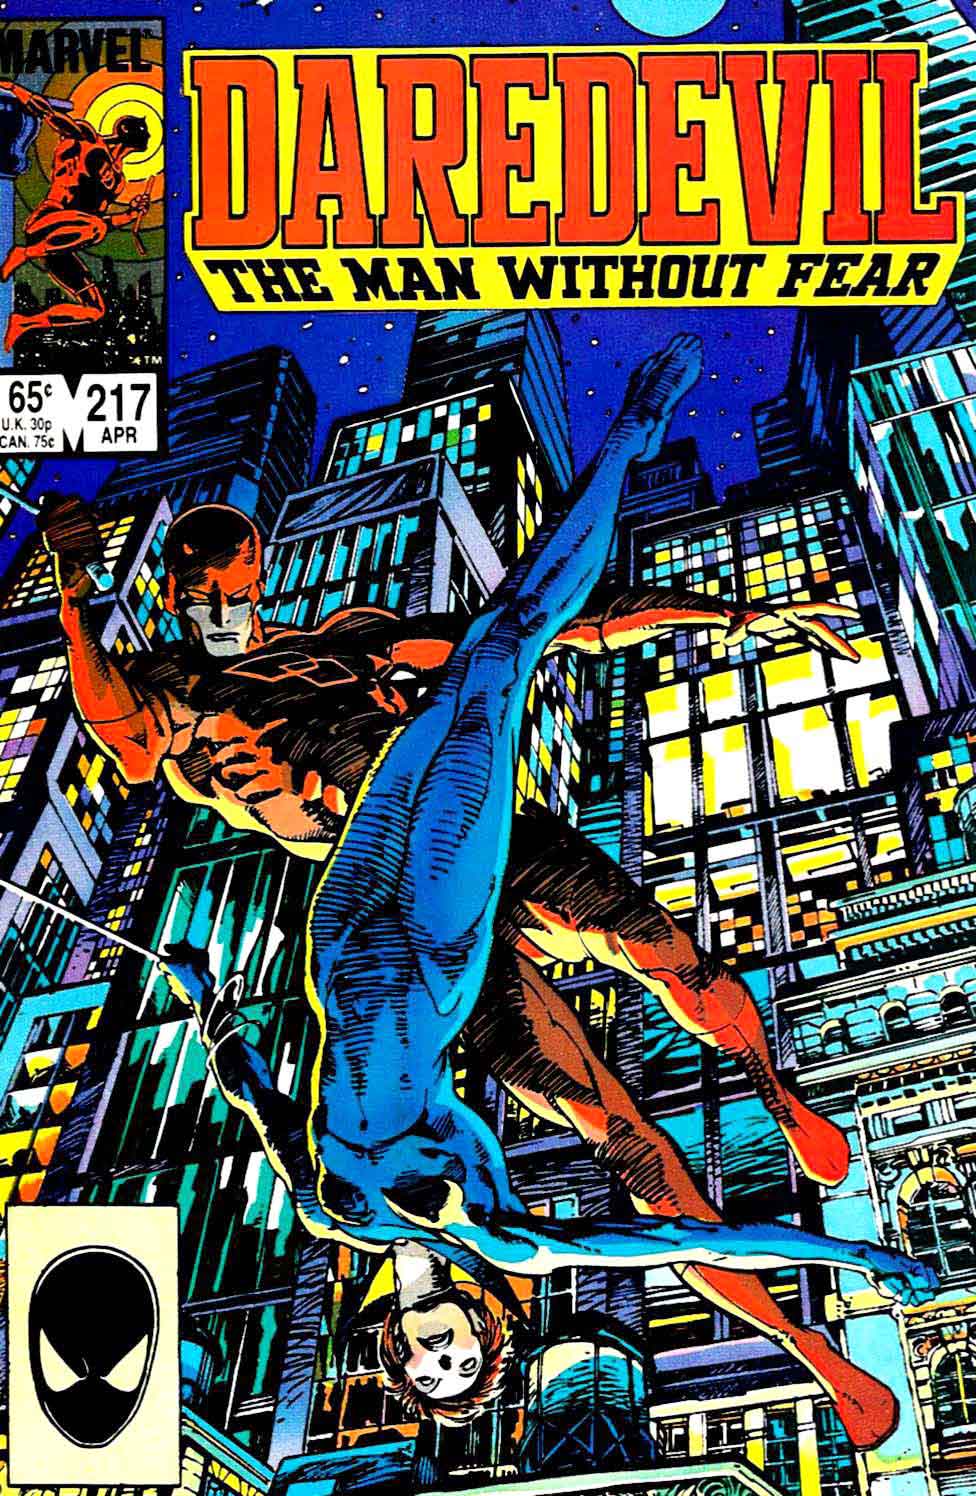 Barry Windsor Smith marvel 1980s black widow comic book cover - Daredevil #217